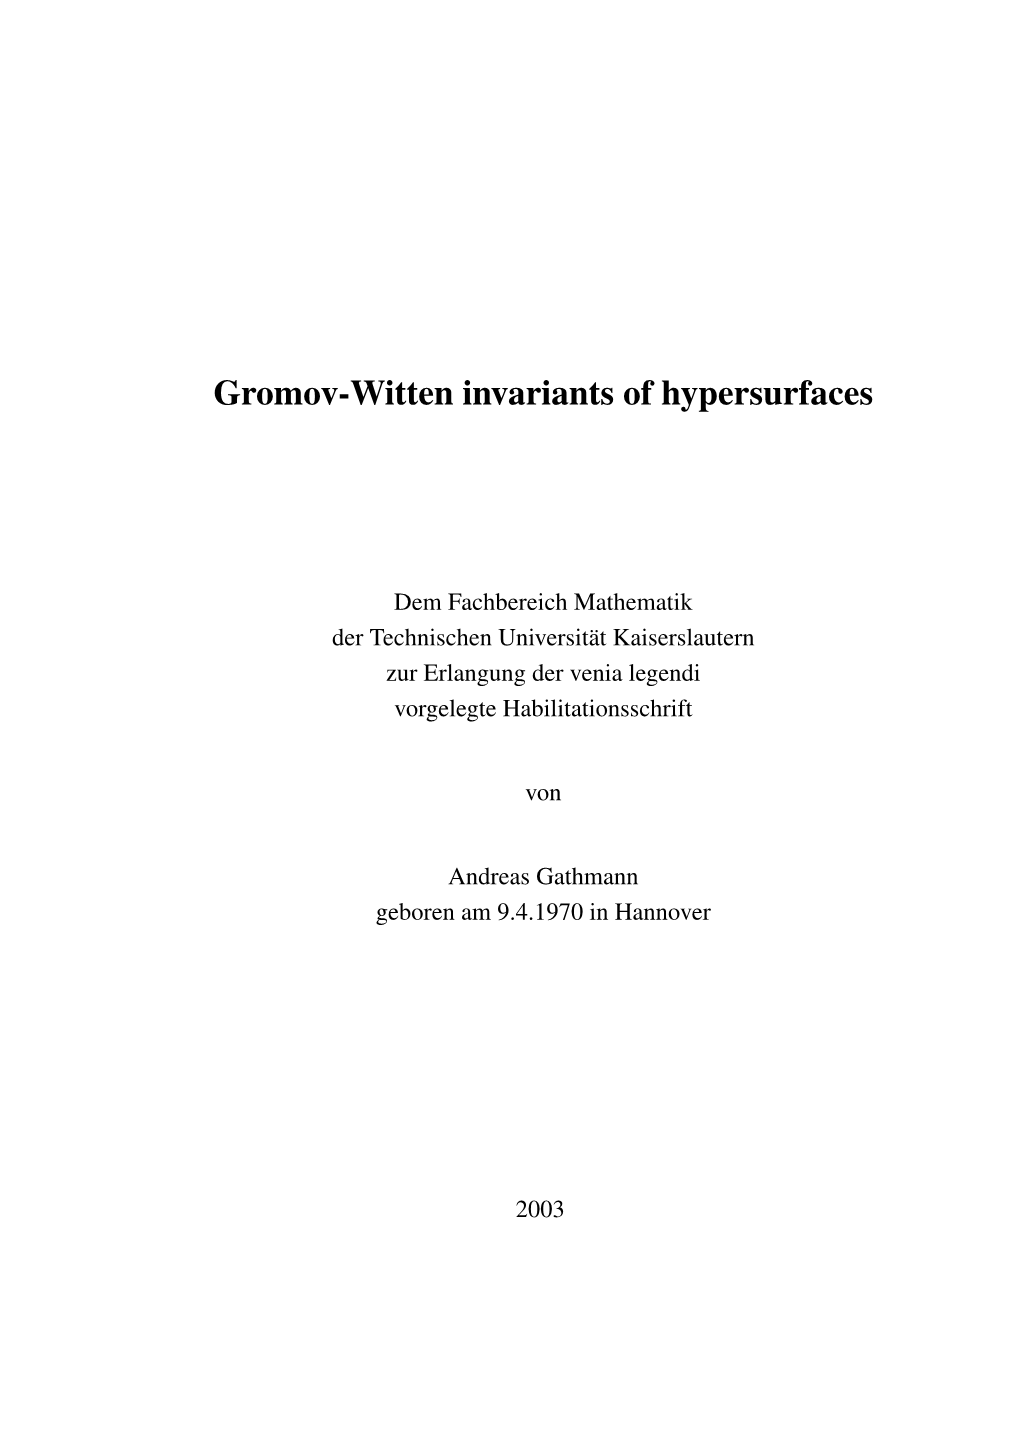 Gromov-Witten Invariants of Hypersurfaces